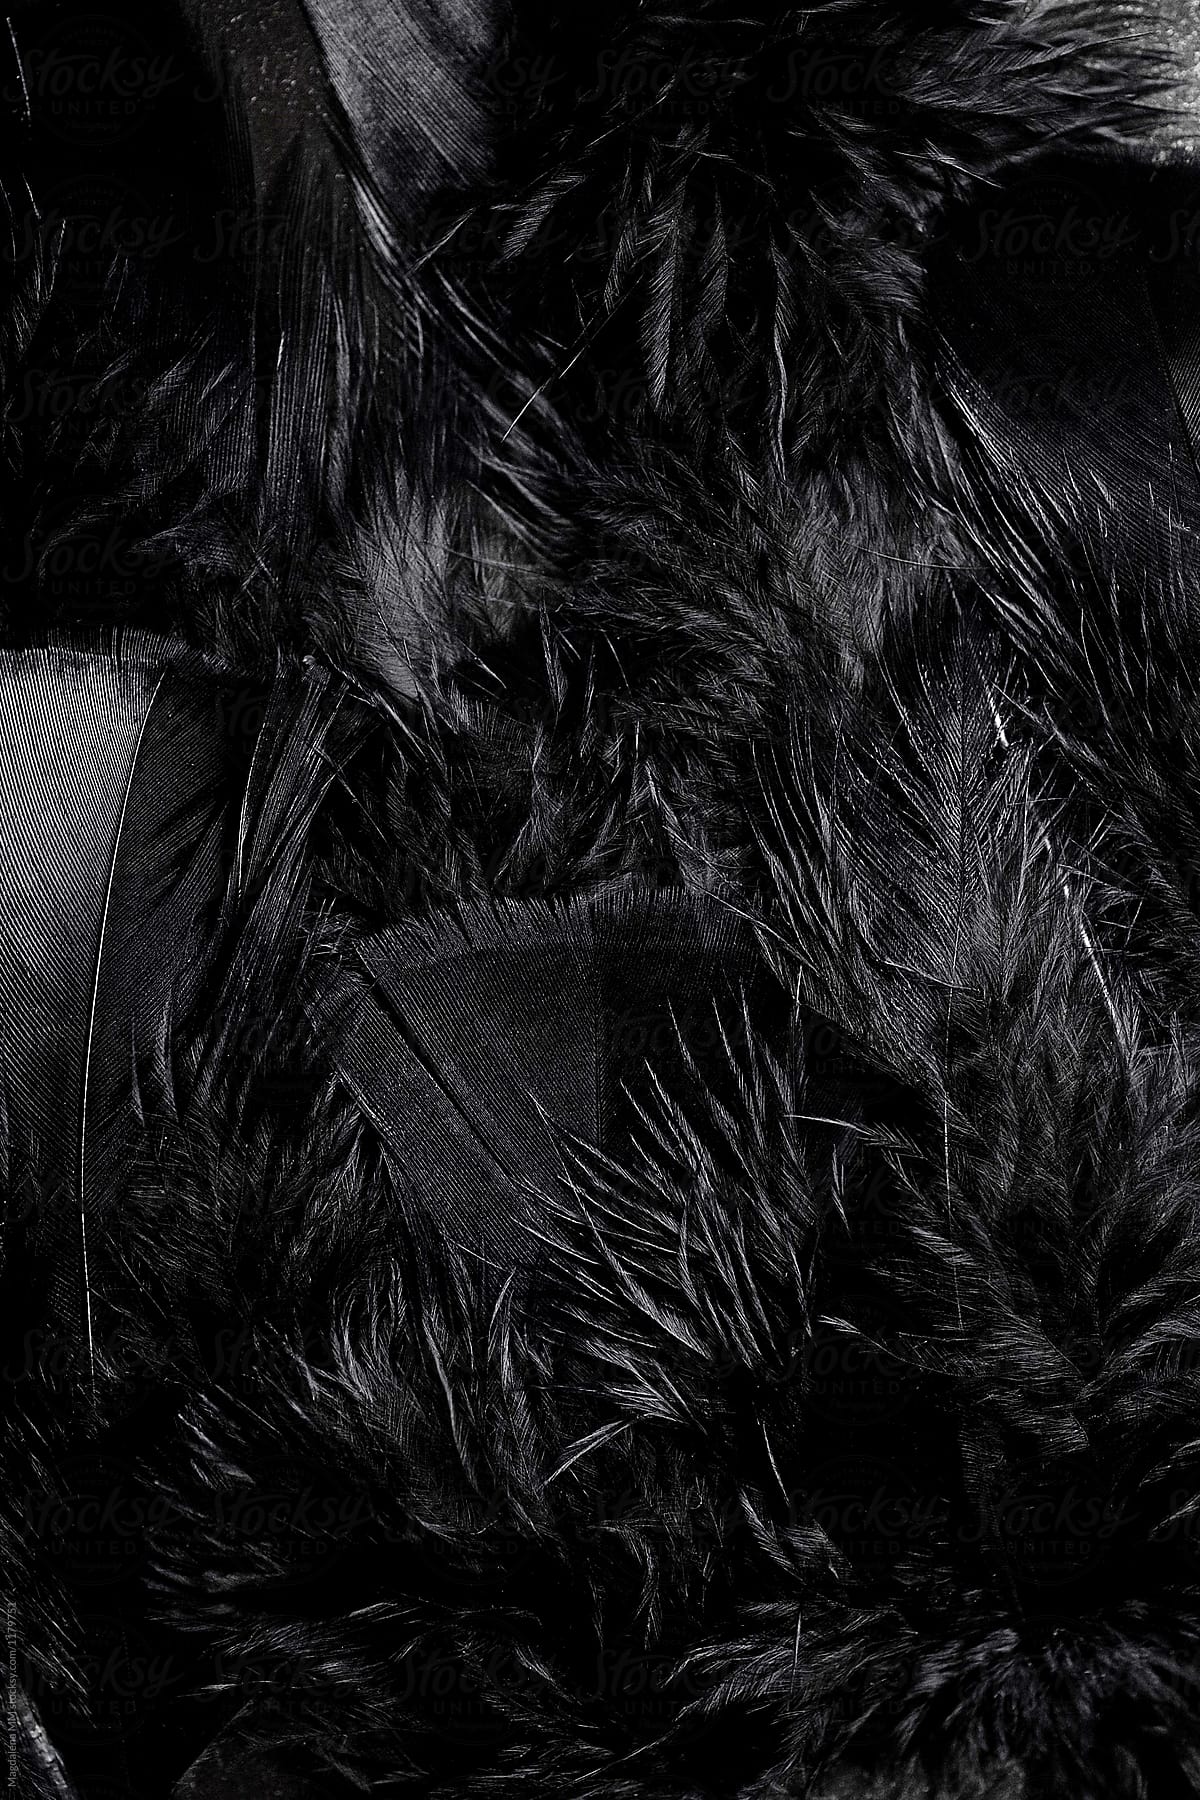 Black Feathers by Stocksy Contributor Magdalena M - Stocksy